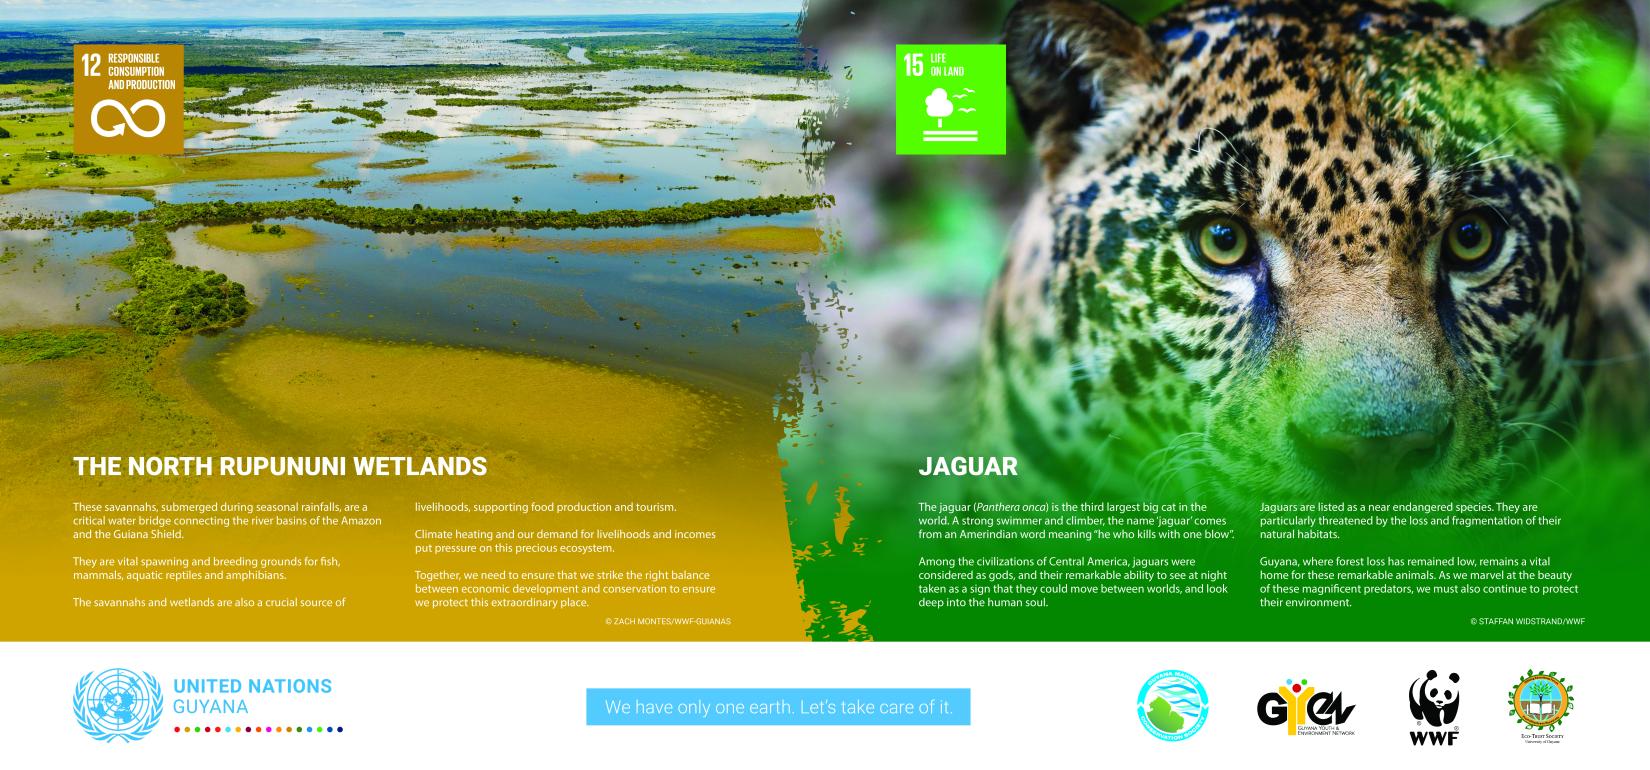 The North Rupununi Wetlands and the Jaguar